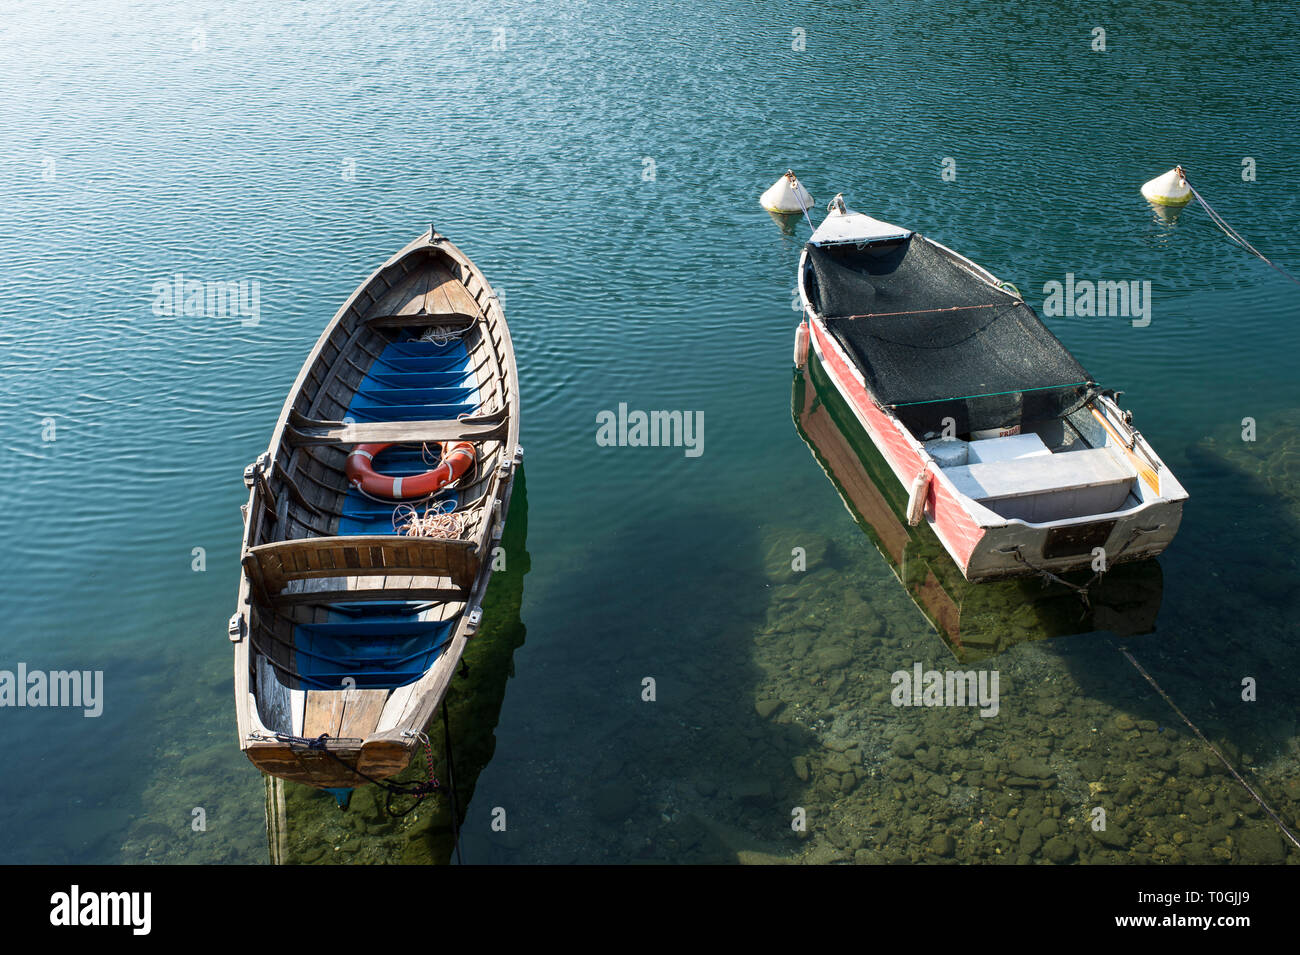 Italy, Piedmont, Mergozzo Lake, traditional boat Stock Photo